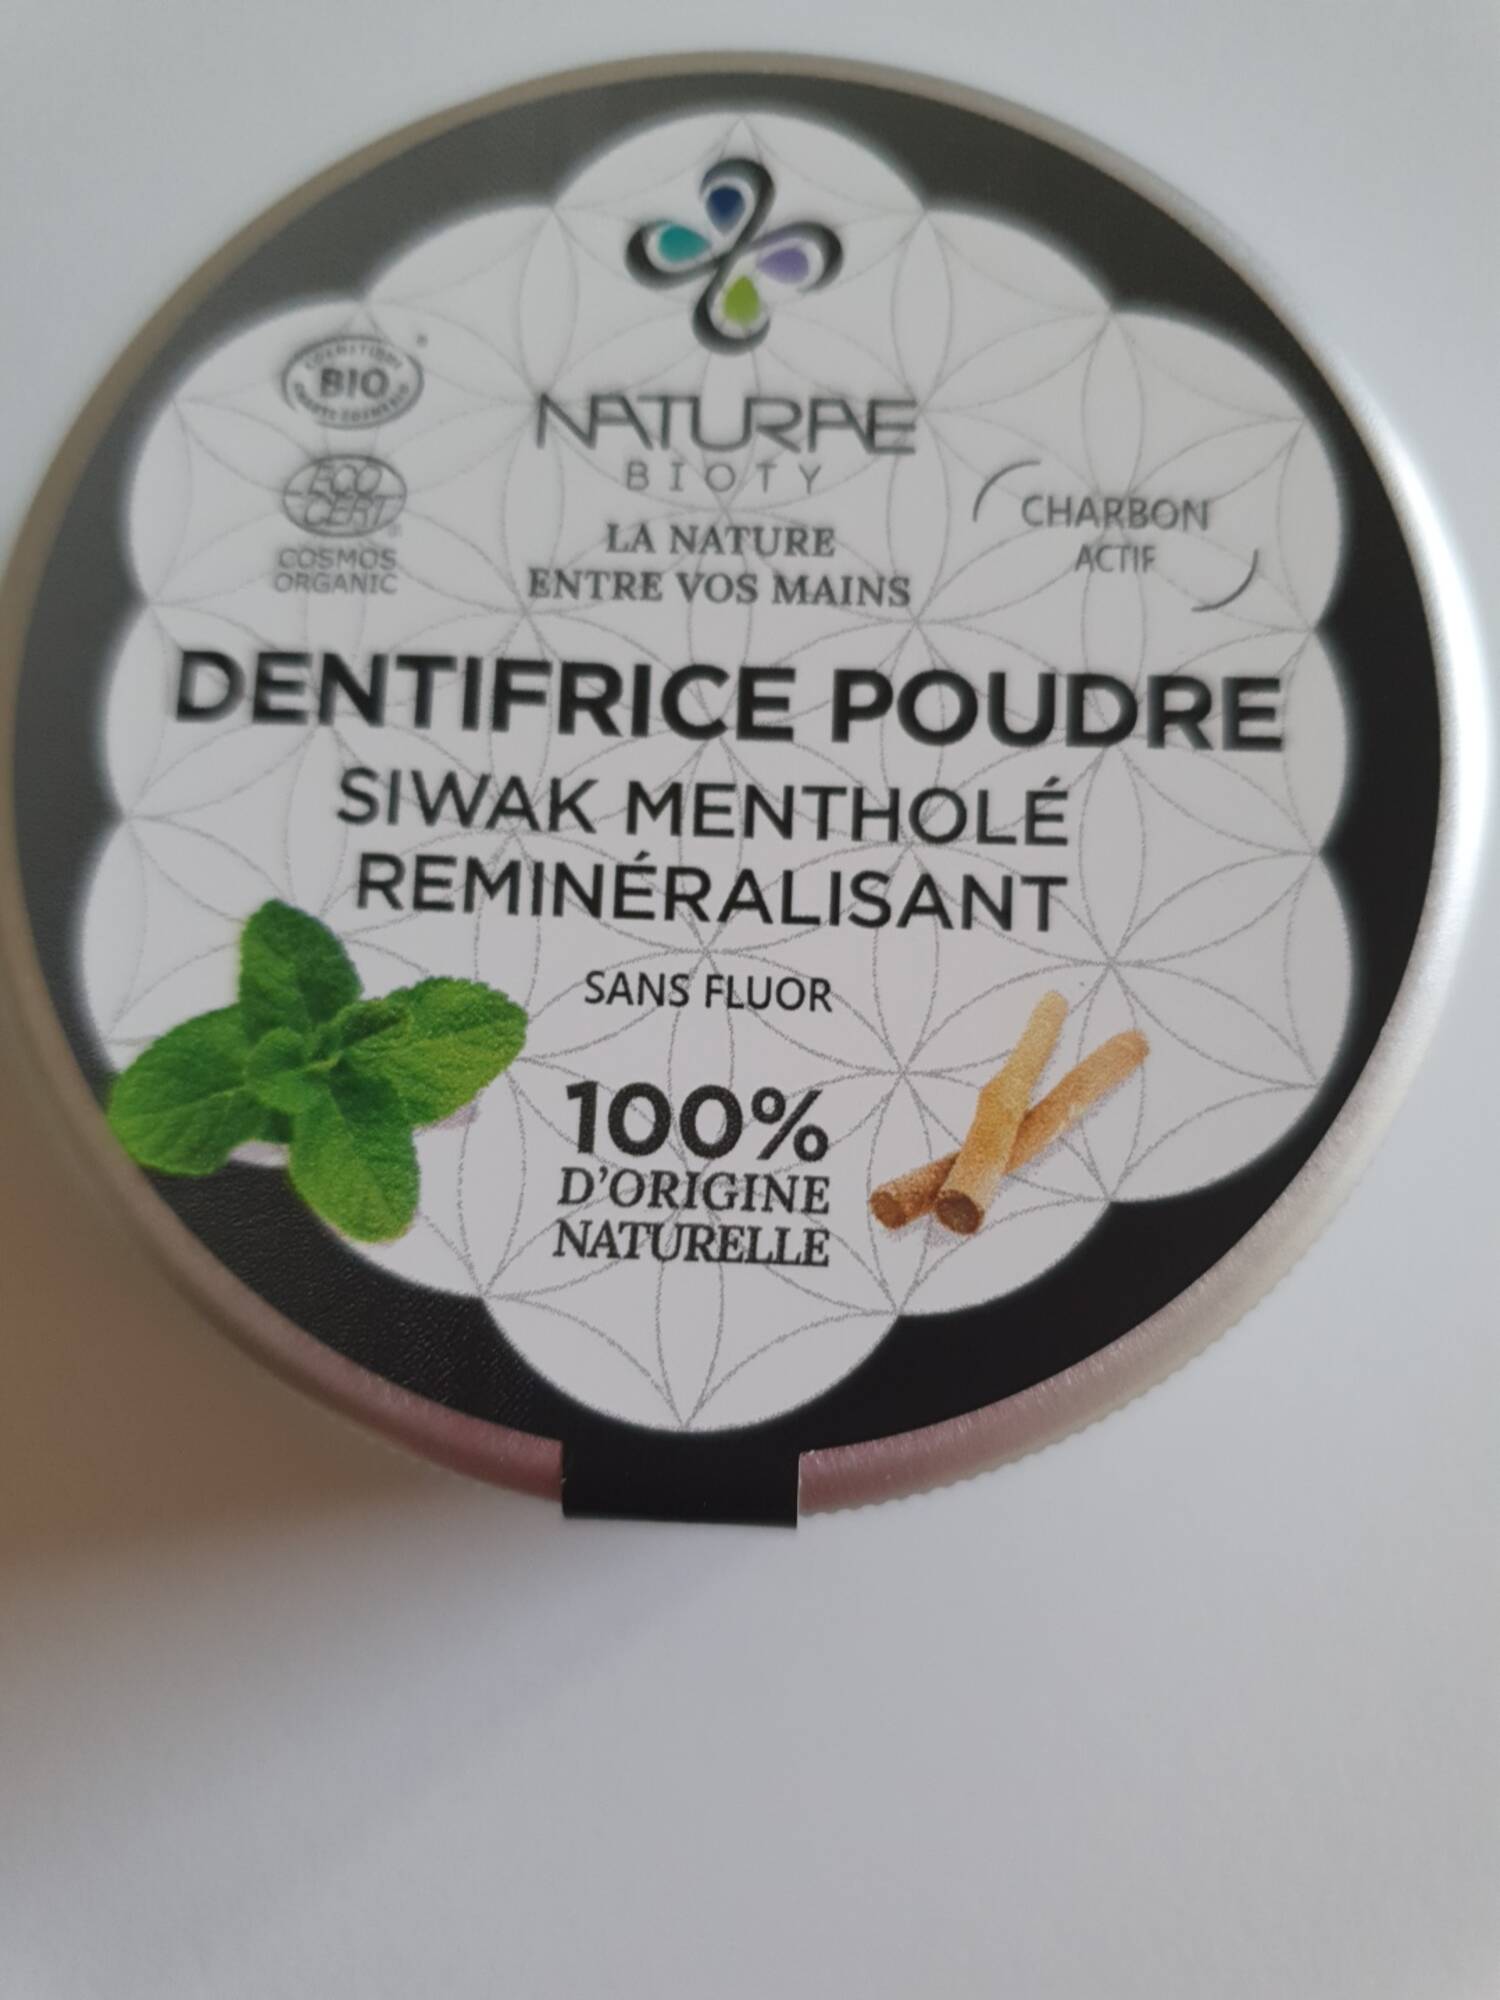 NATURAE BIOTY - Dentifrice poudre